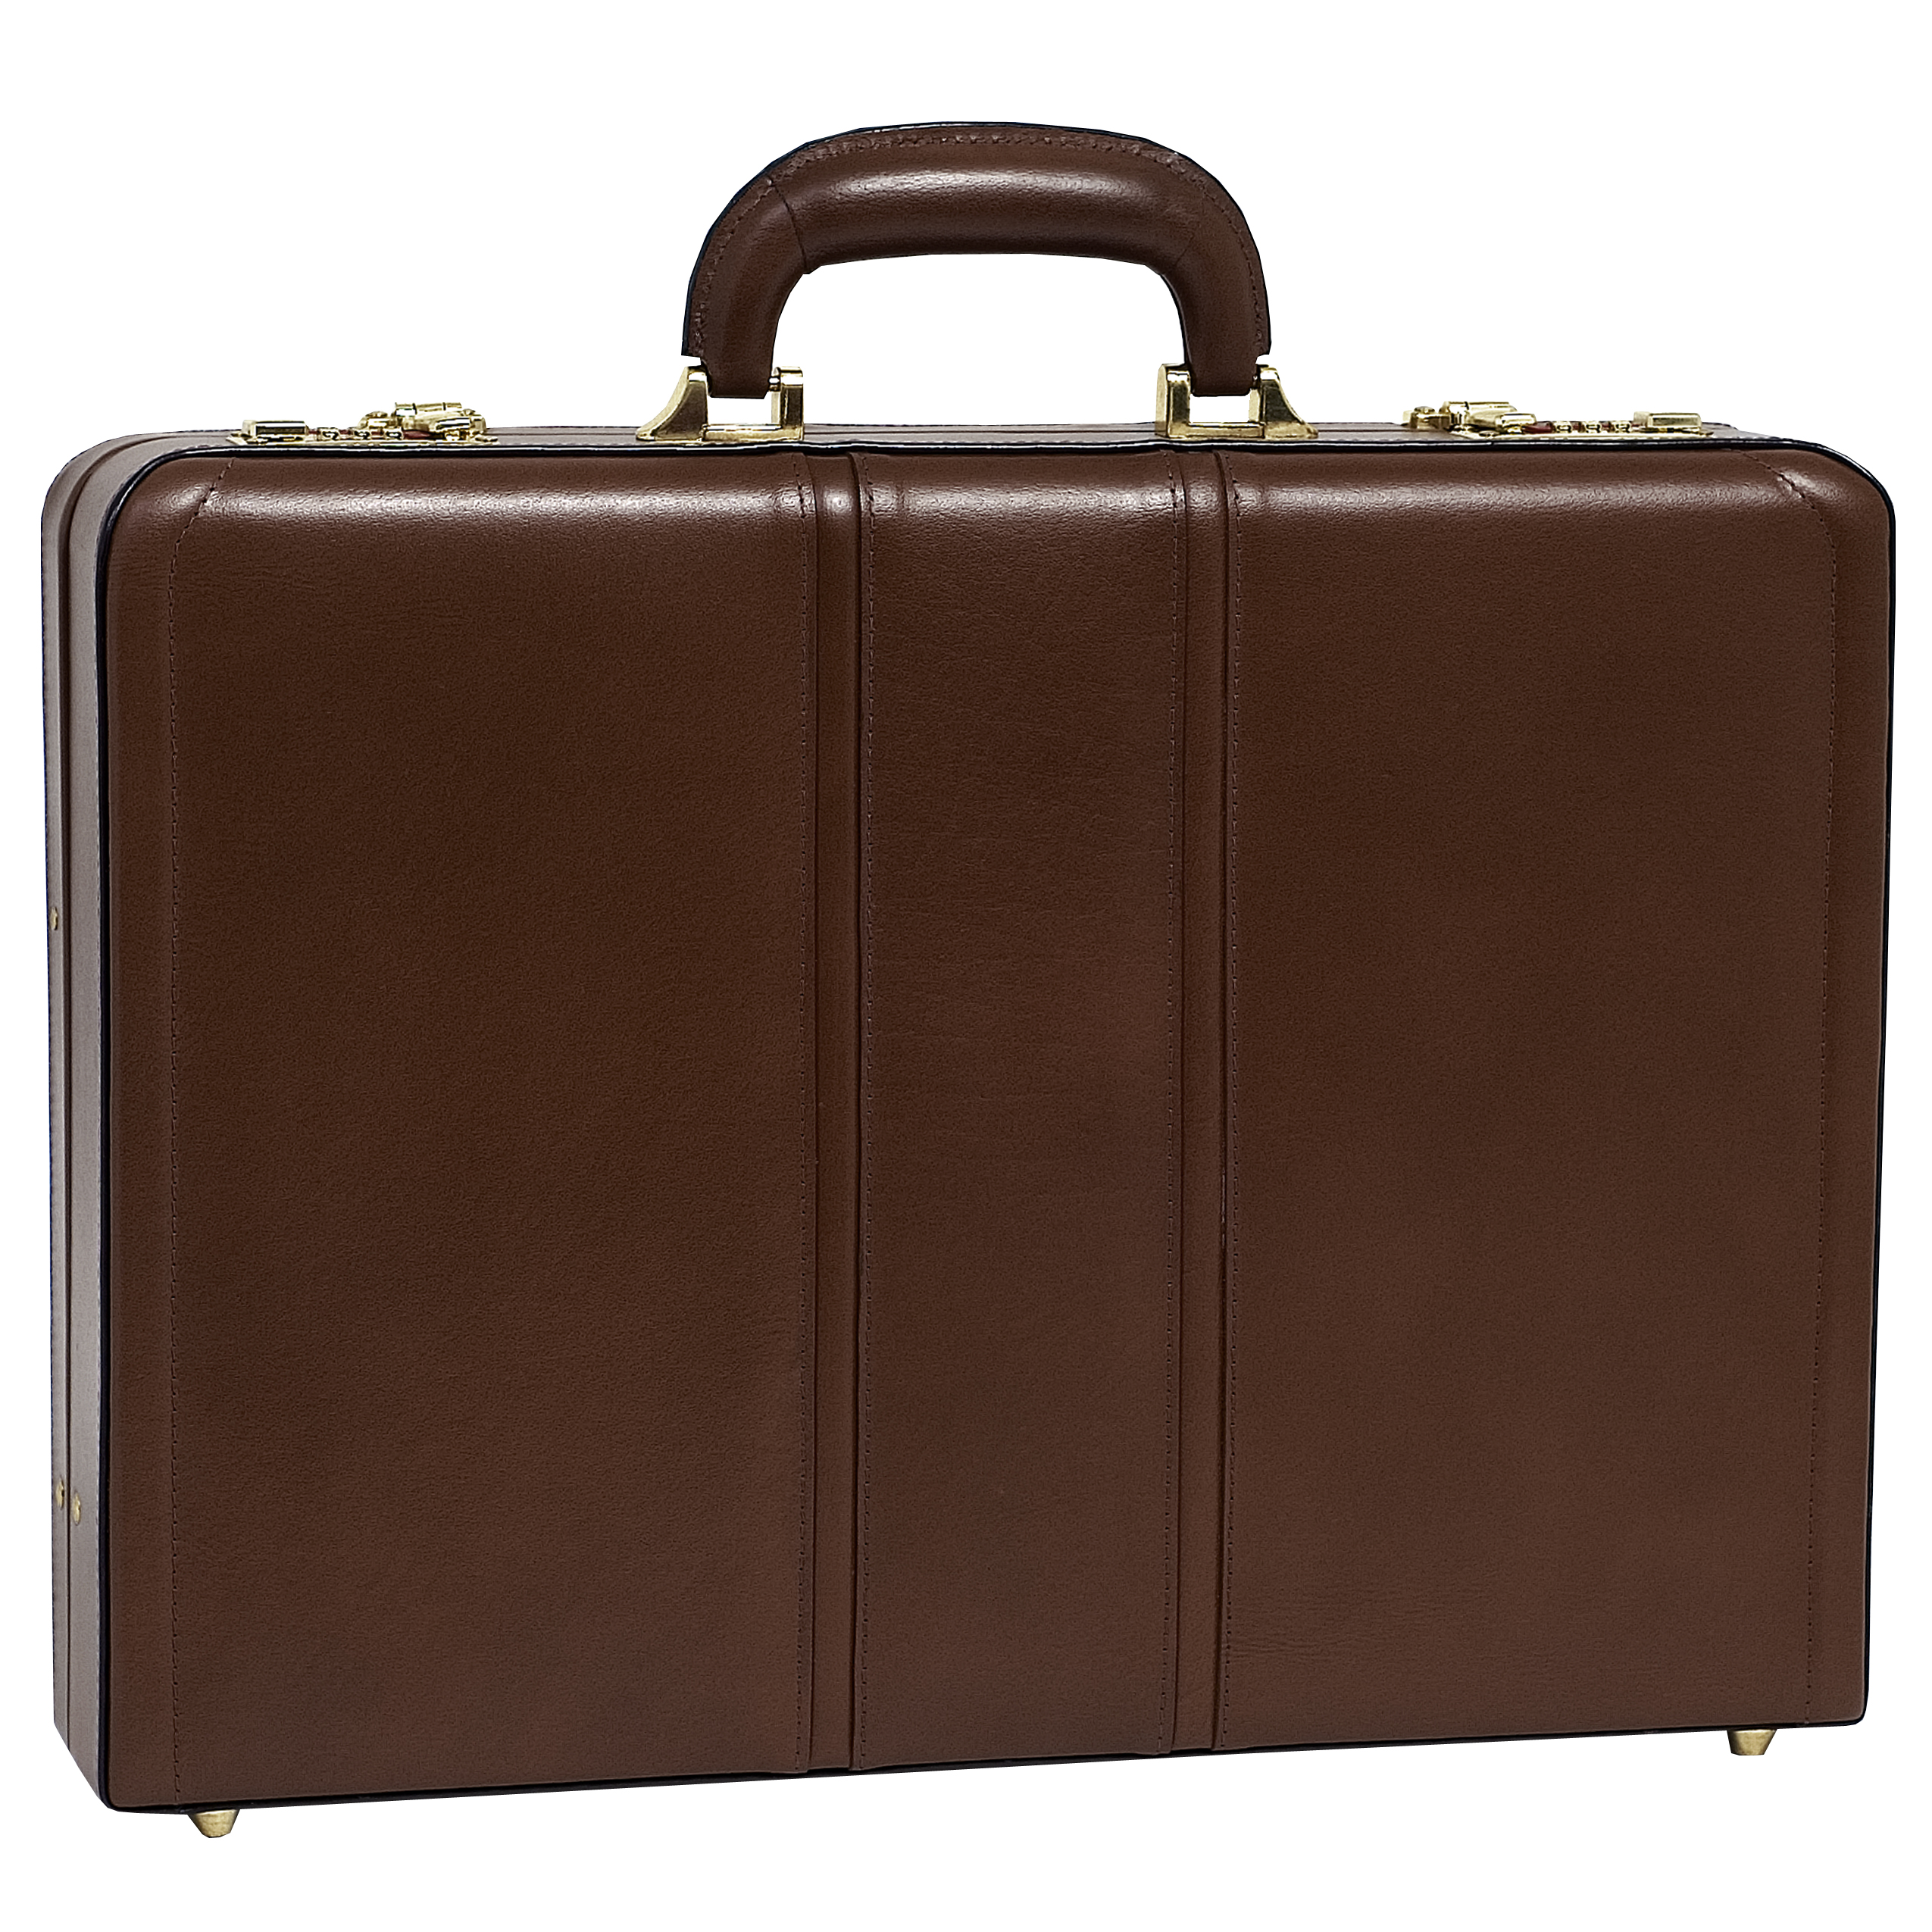 Mcklein 80464 Coughlin 80464- Brown Leather Expandable Attache Case